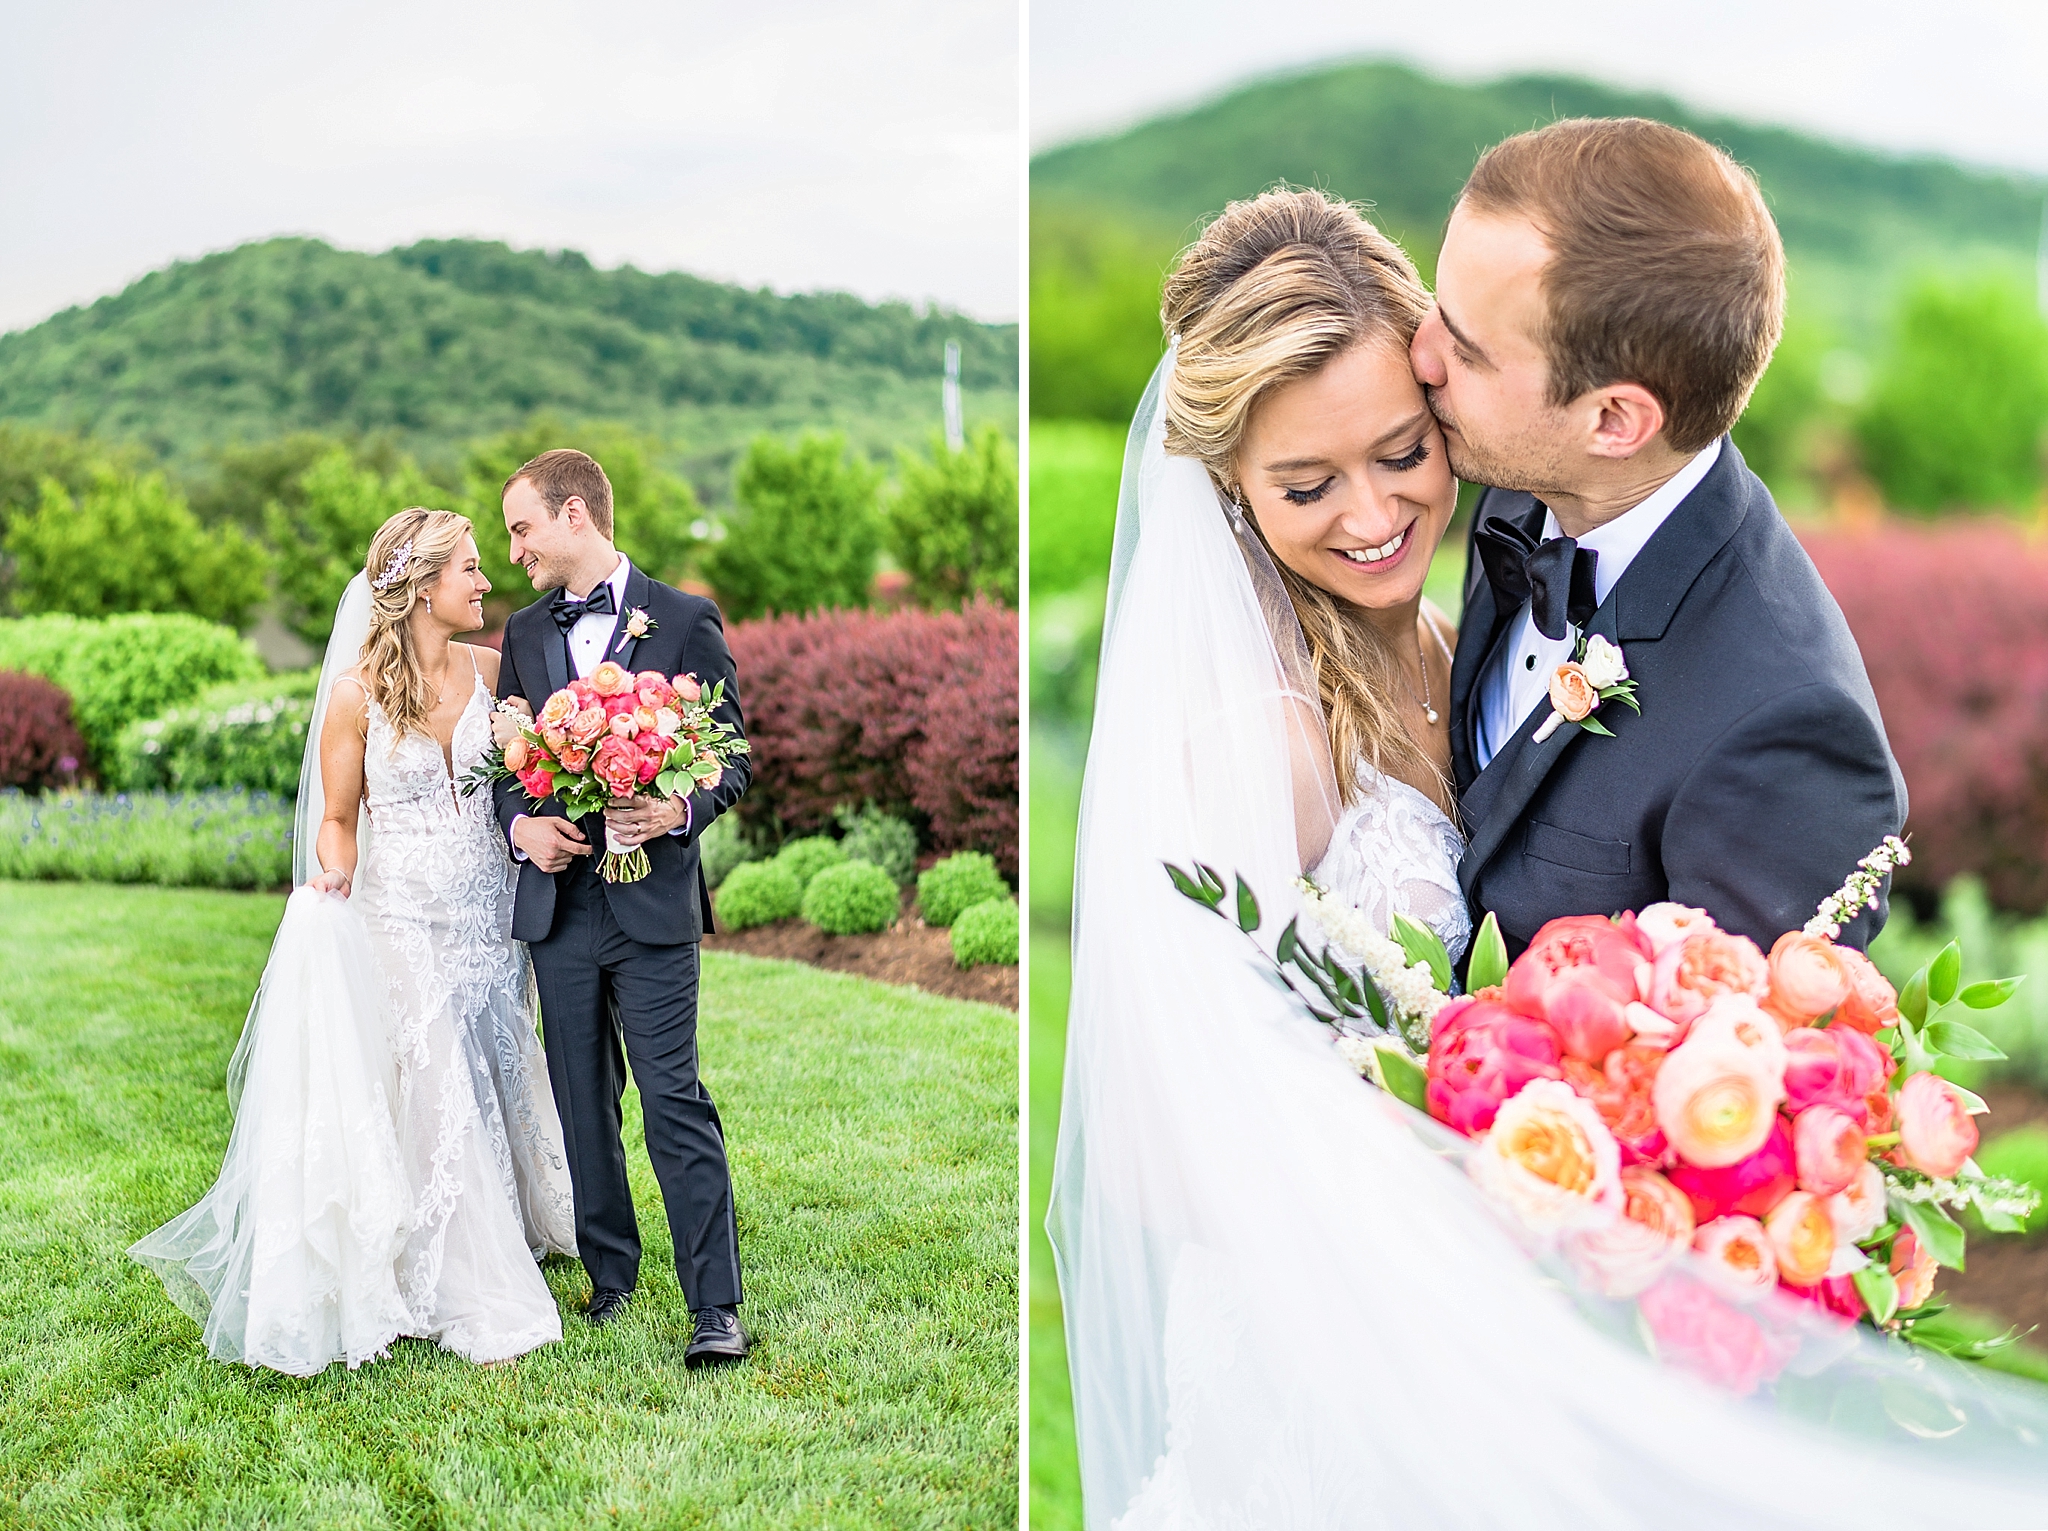 Michael & Laura | Early Mountain, Virginia Wedding Photographer